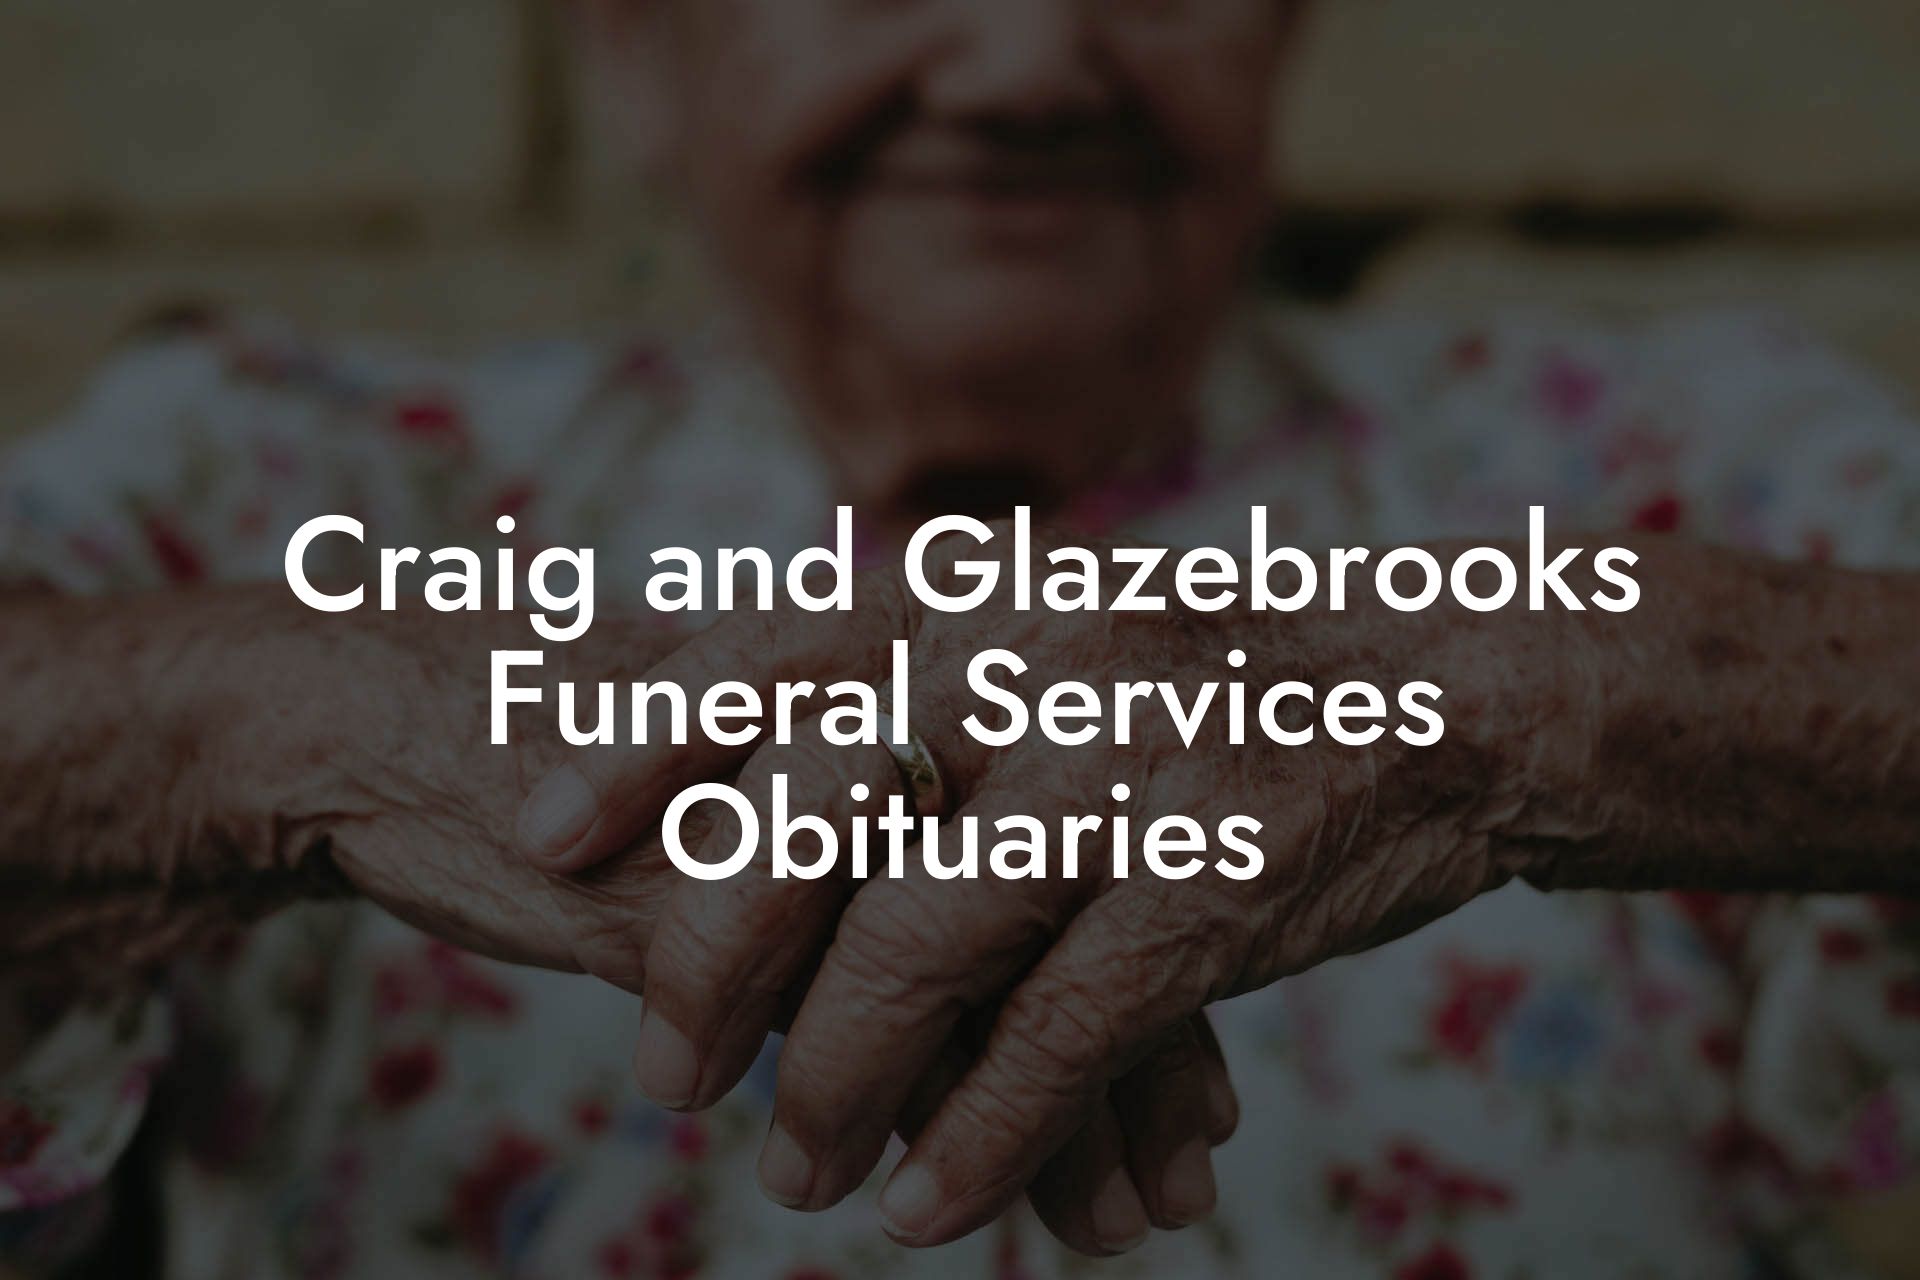 Craig and Glazebrooks Funeral Services Obituaries